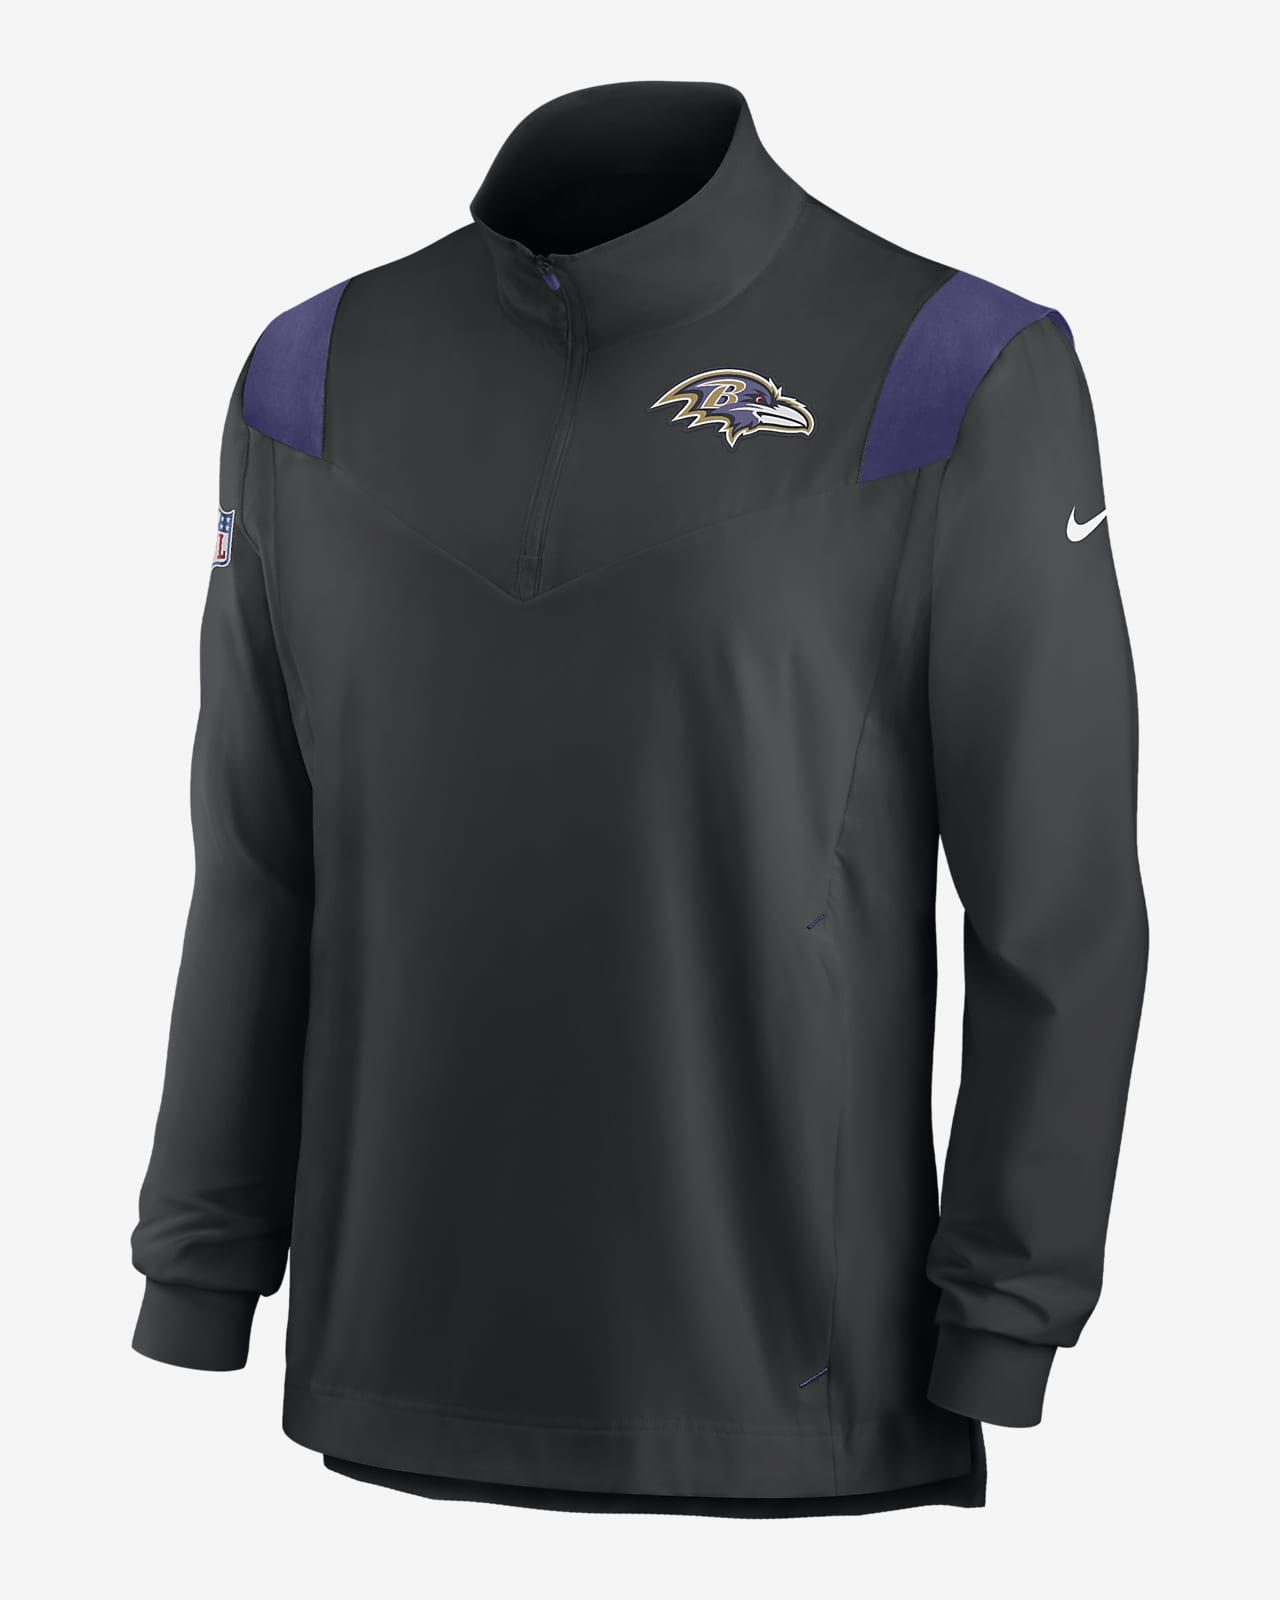 Nike Repel Coach (NFL Baltimore Ravens) Men's 1/4-Zip Jacket